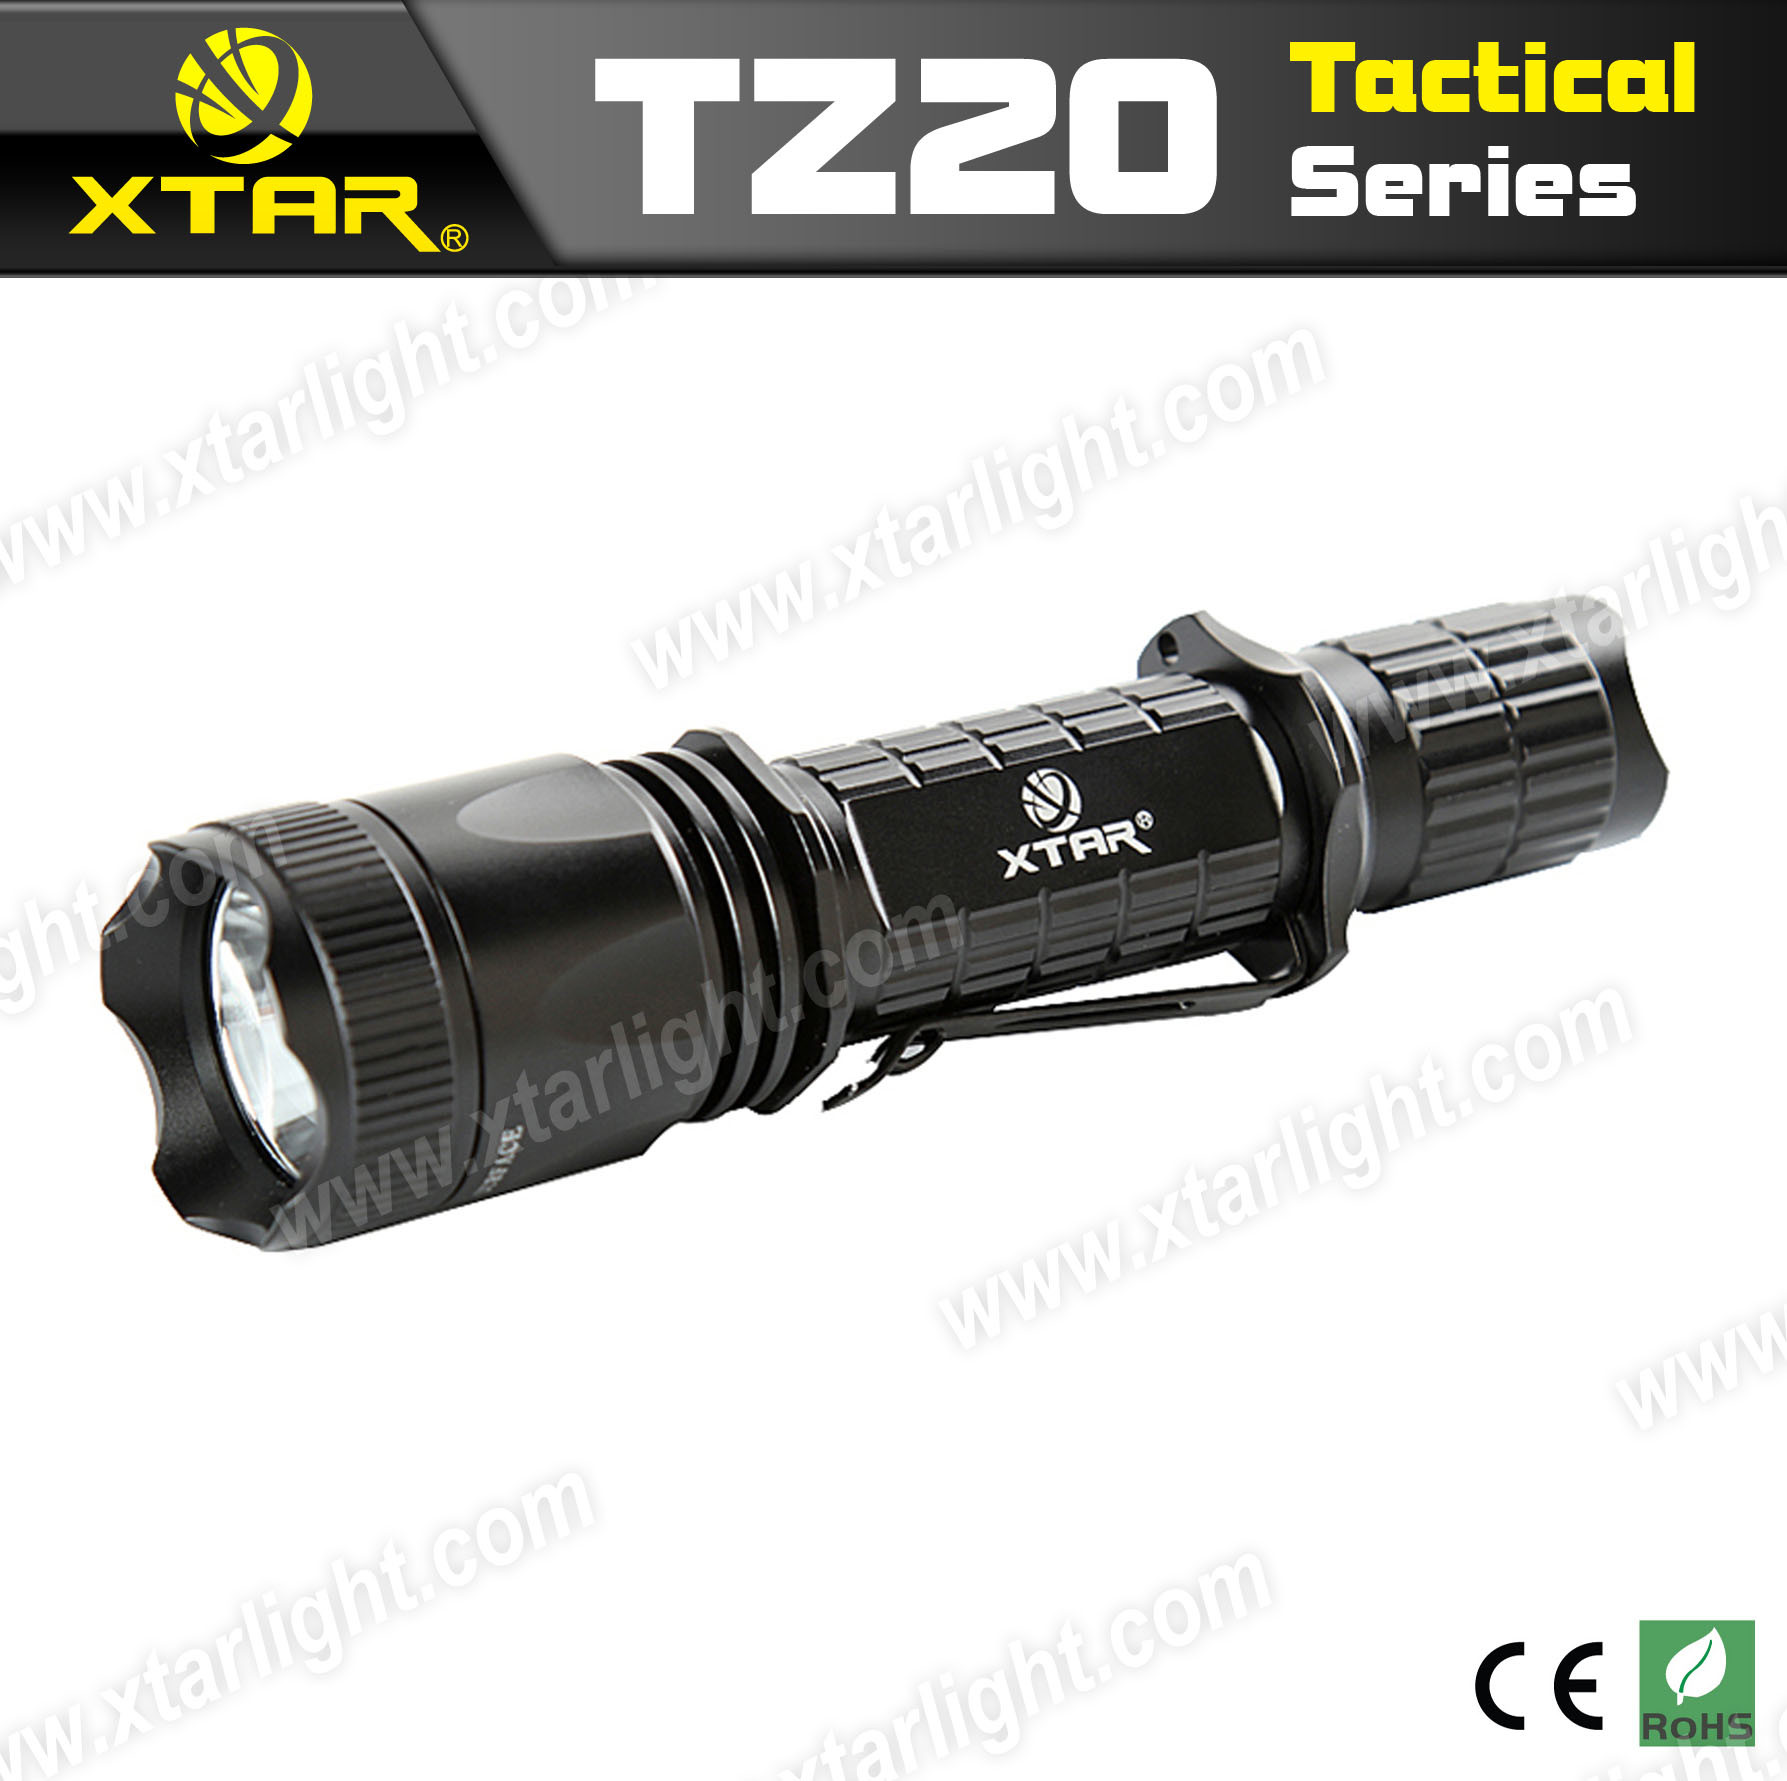 Xm-L U2 Military Police LED Flashlight (TZ20)